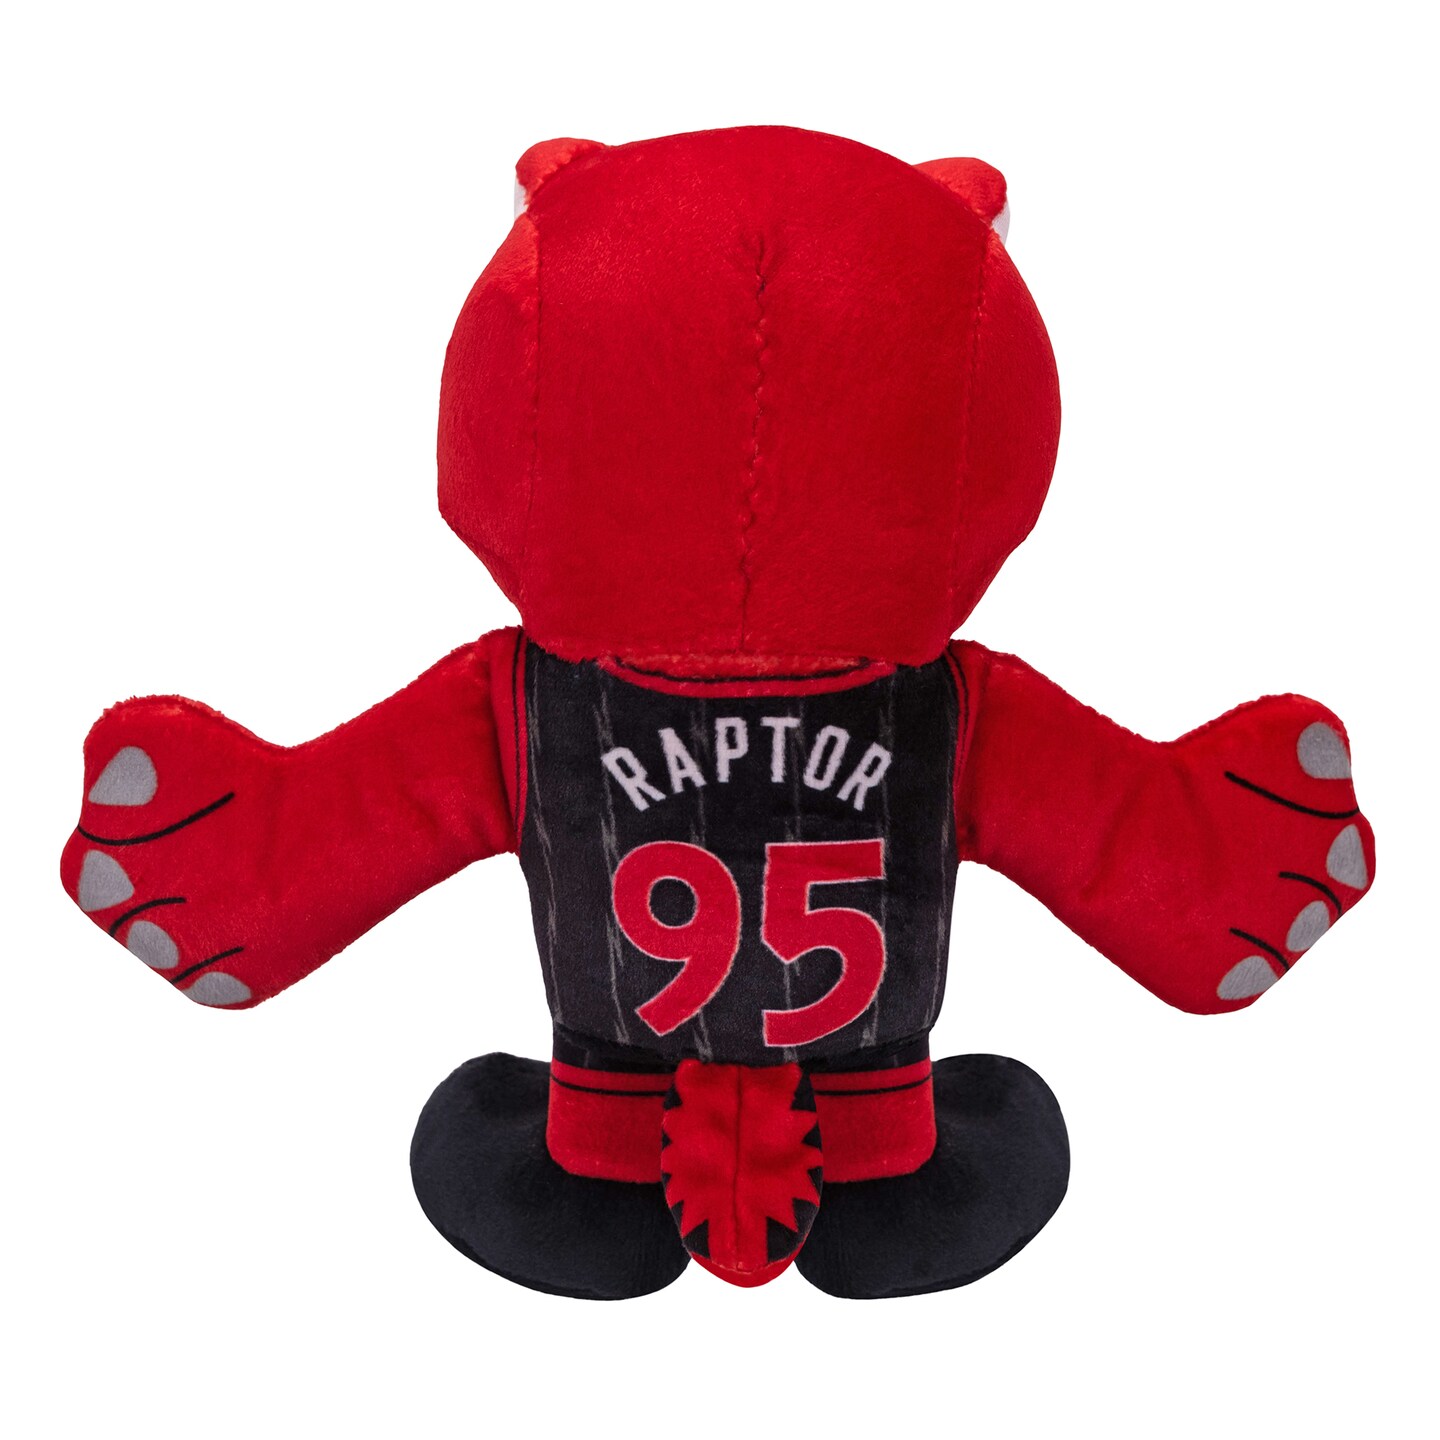 The Raptor, Unboxing, Toronto Raptors, NBA Mascot